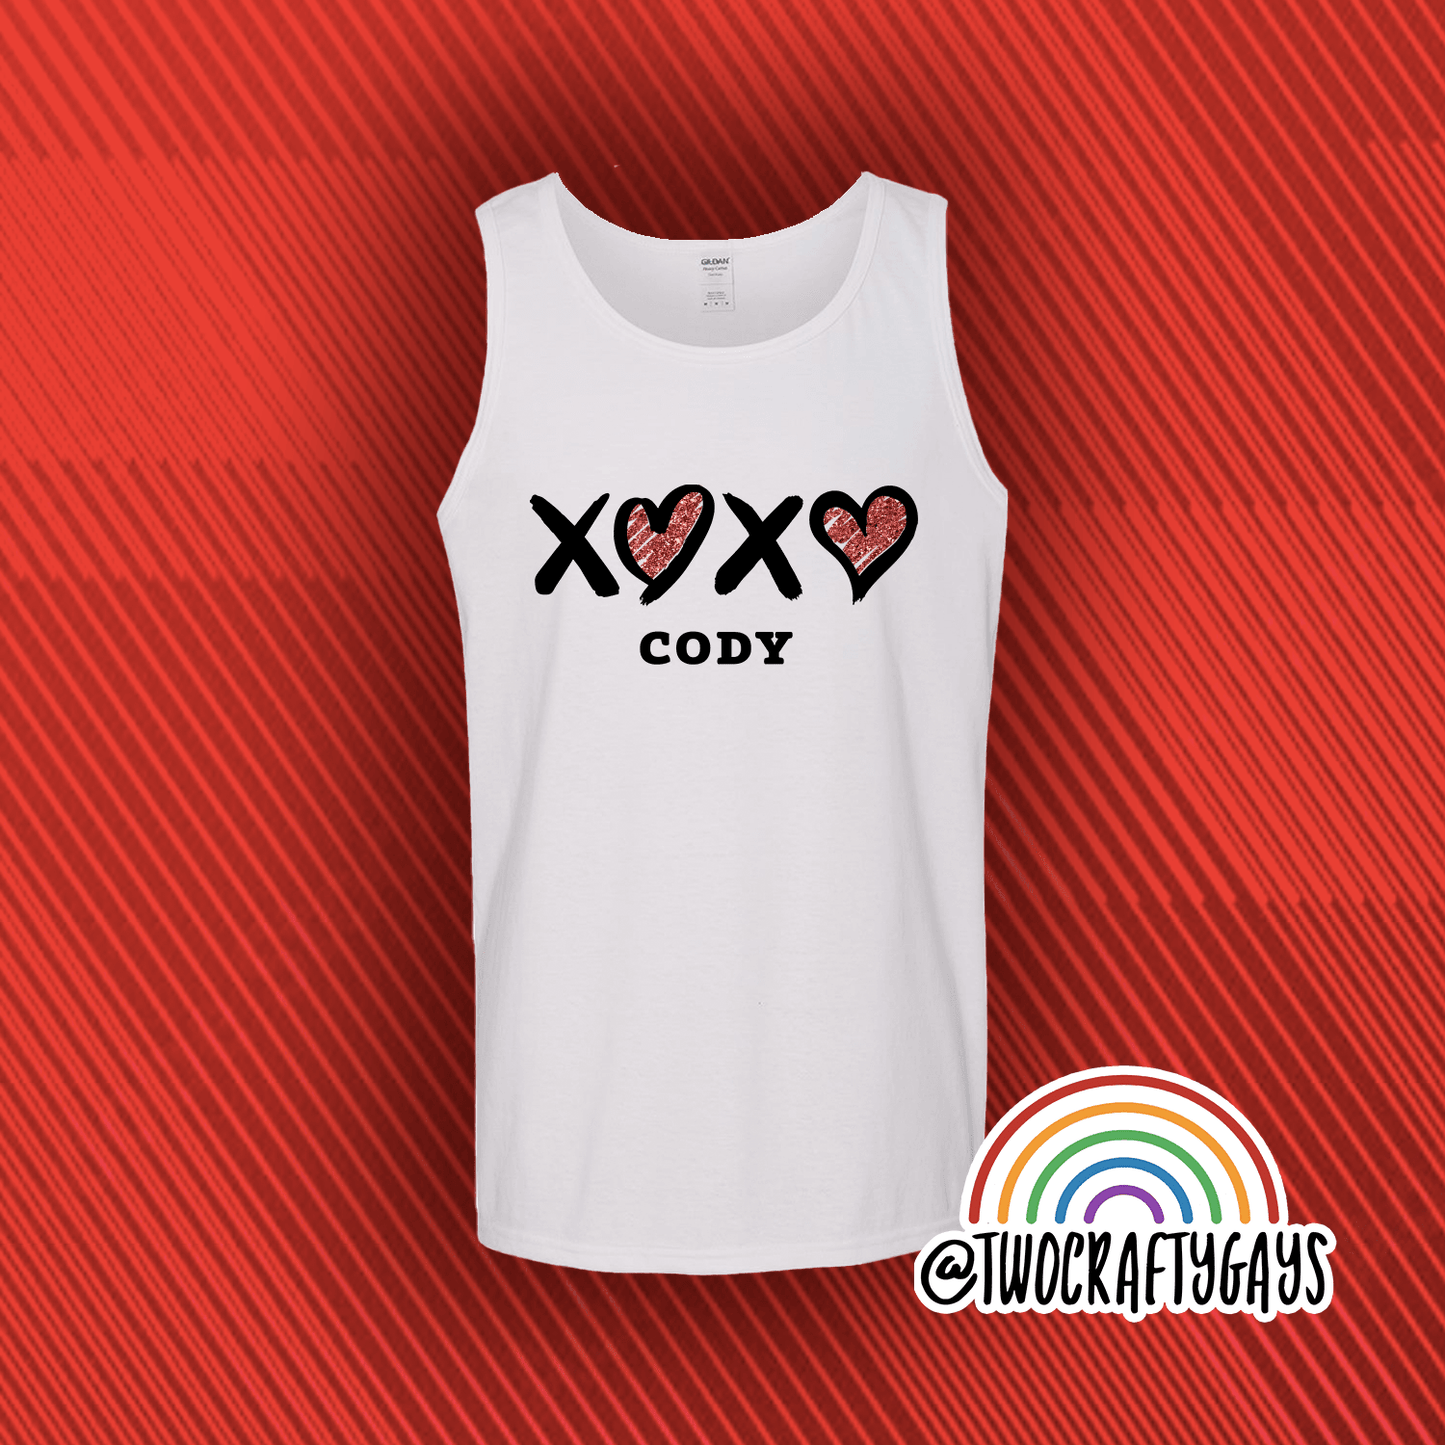 XOXO Cody Tank & Shirt - Two Crafty Gays